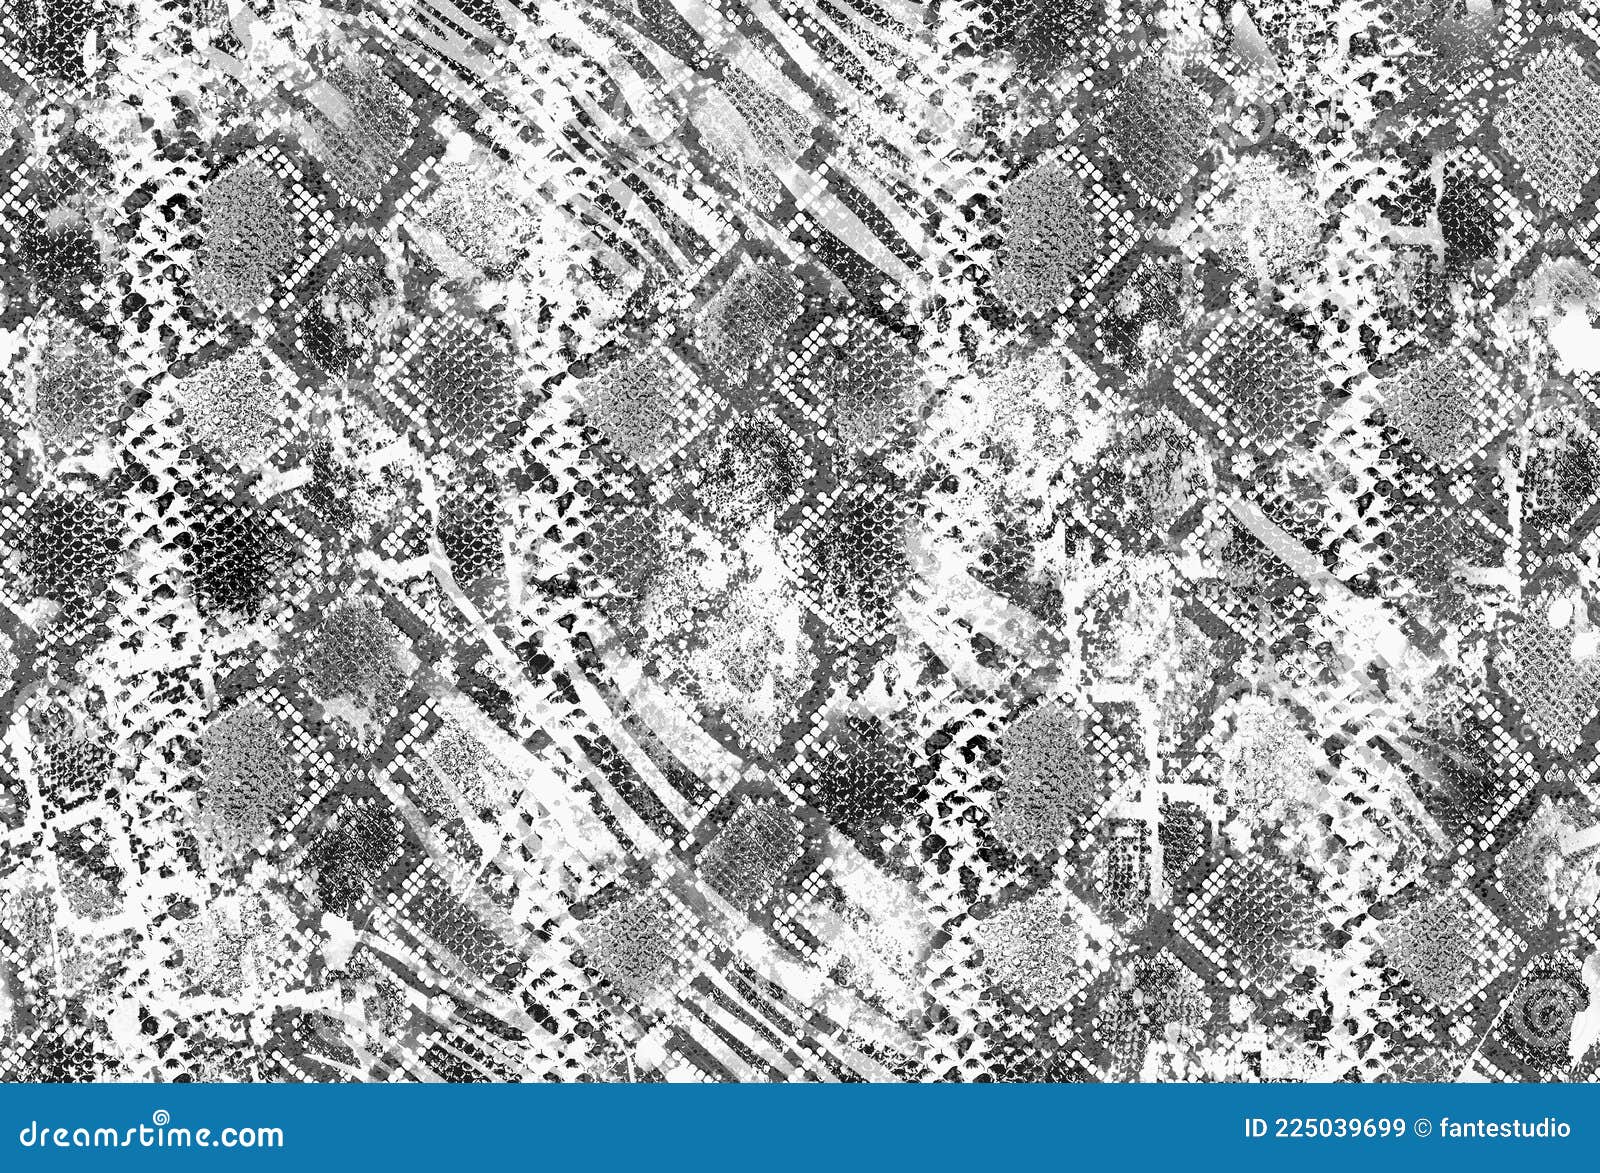 Seamless Snake Skin Print with Zebra Texture for Textile Print, Wallpaper,  Cover. Stock Illustration - Illustration of carpet, grunge: 225039699